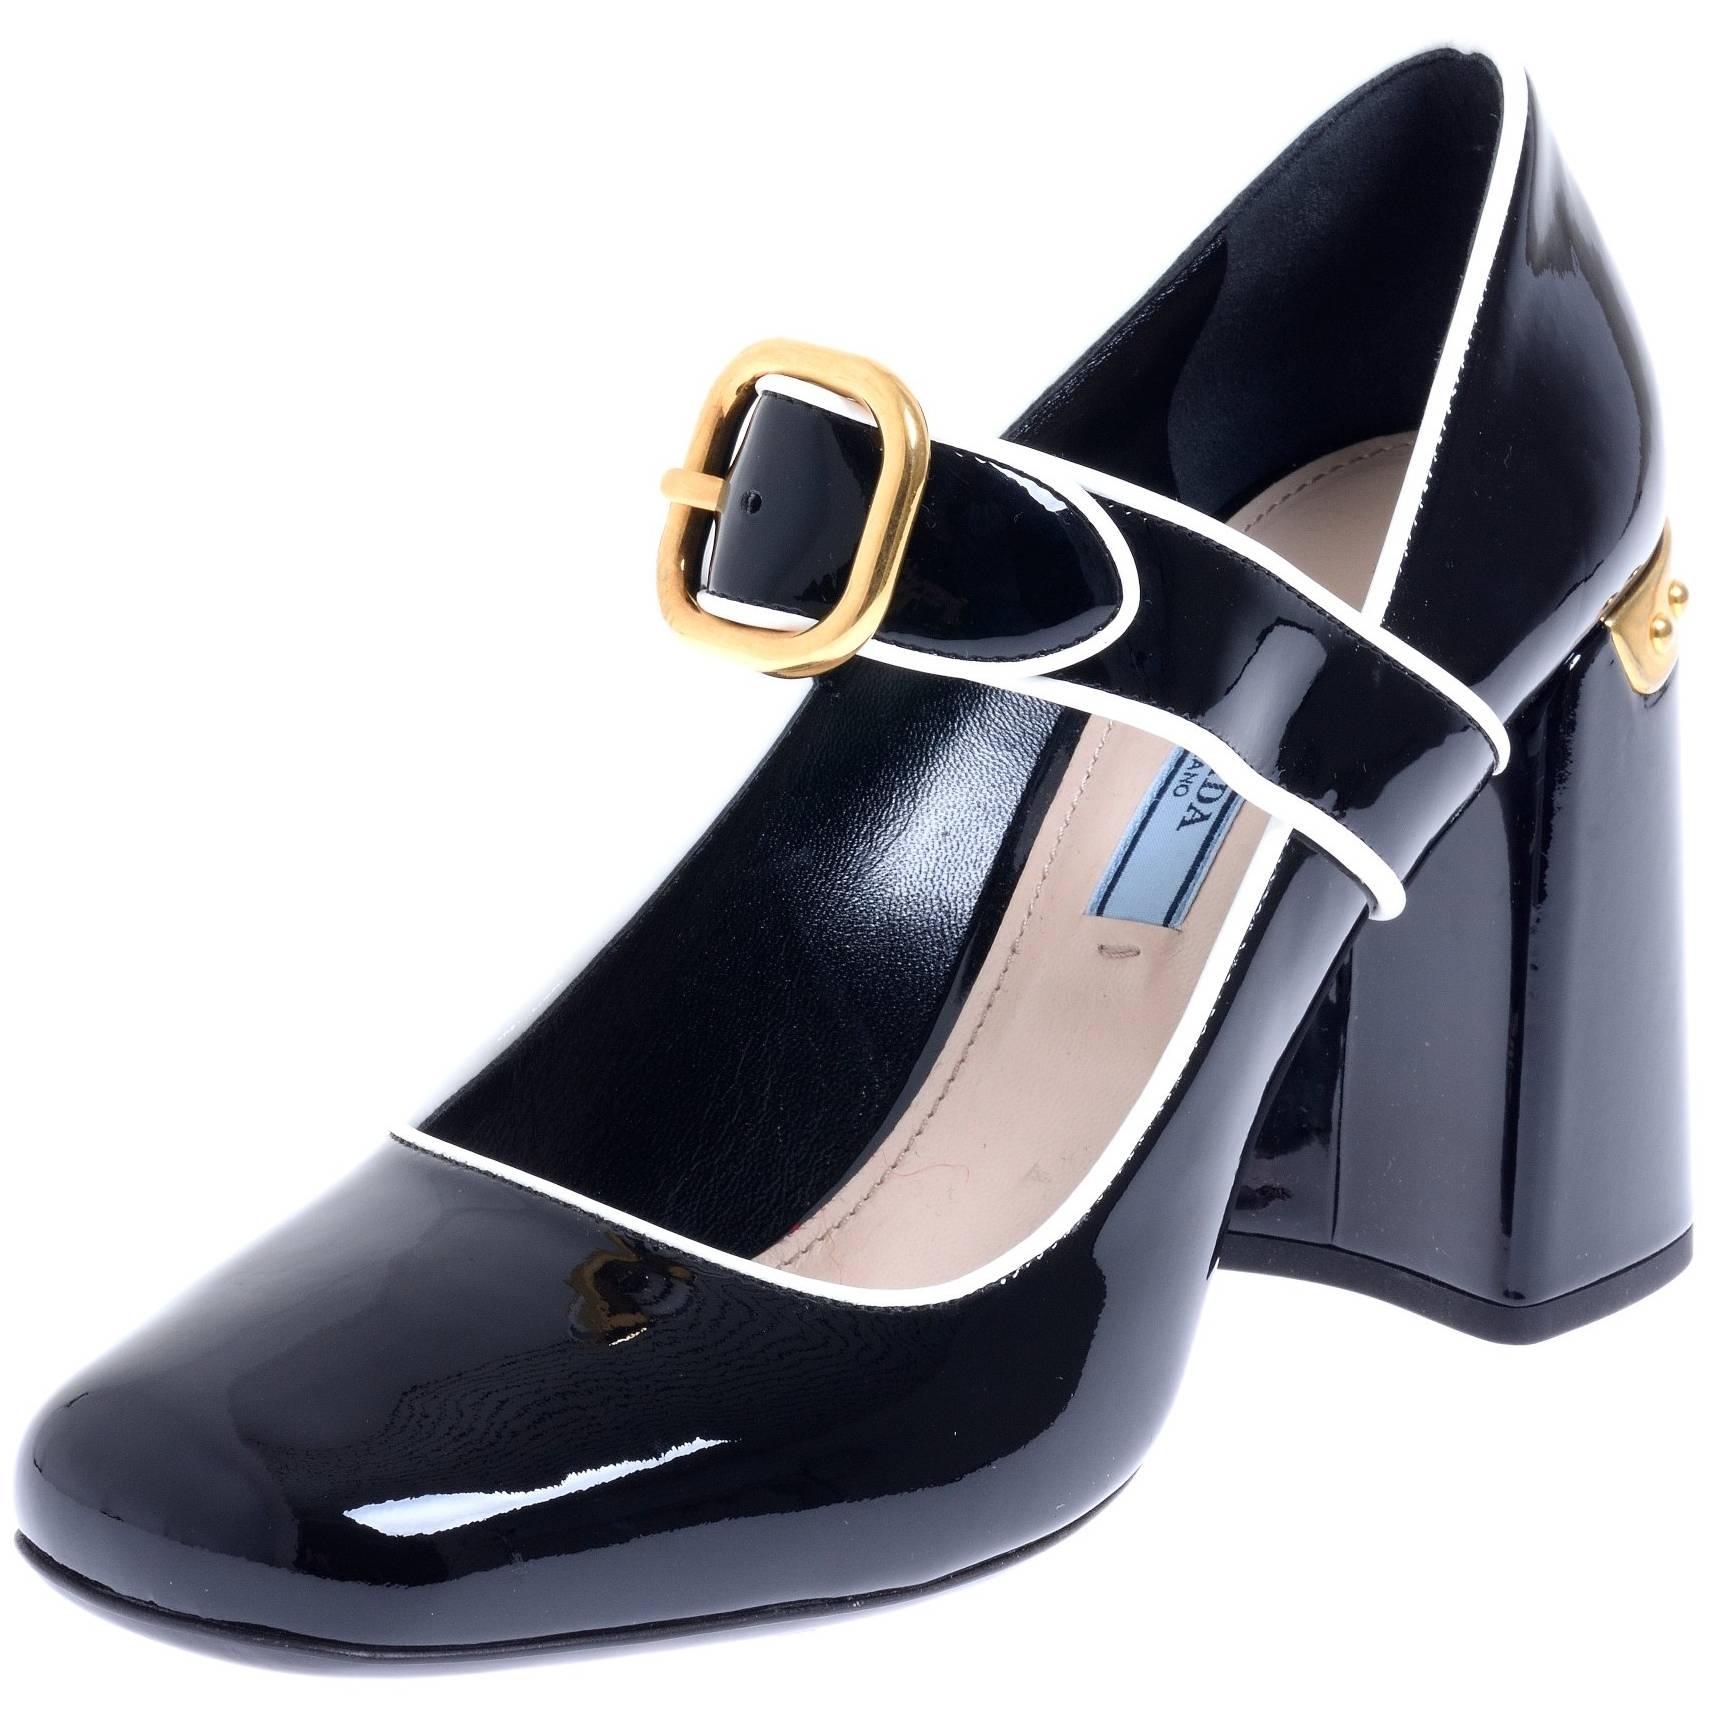 PRADA Black Patent Mary Jane Shoes 